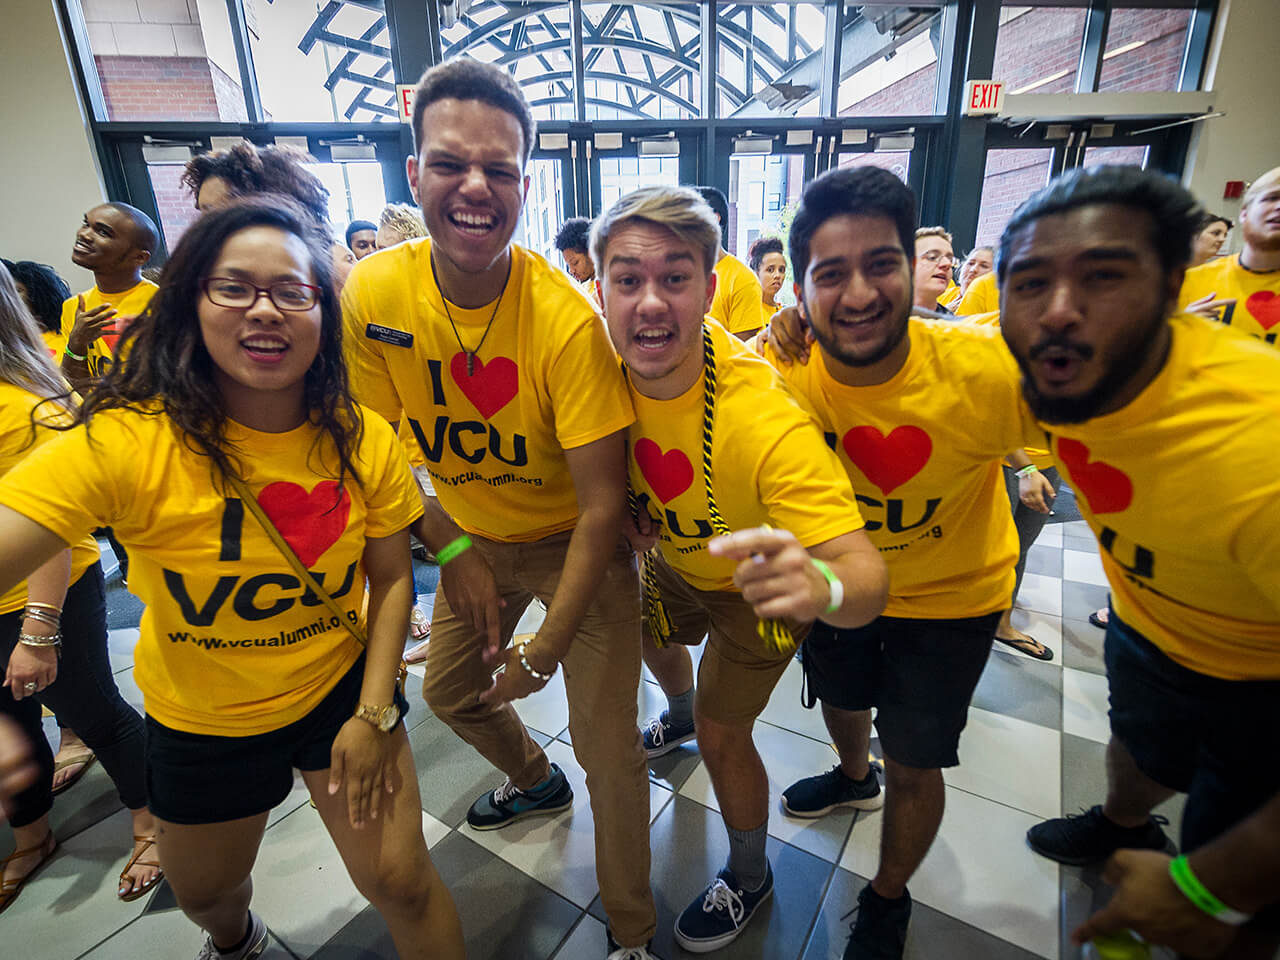 Students wearing I love VCU shirts